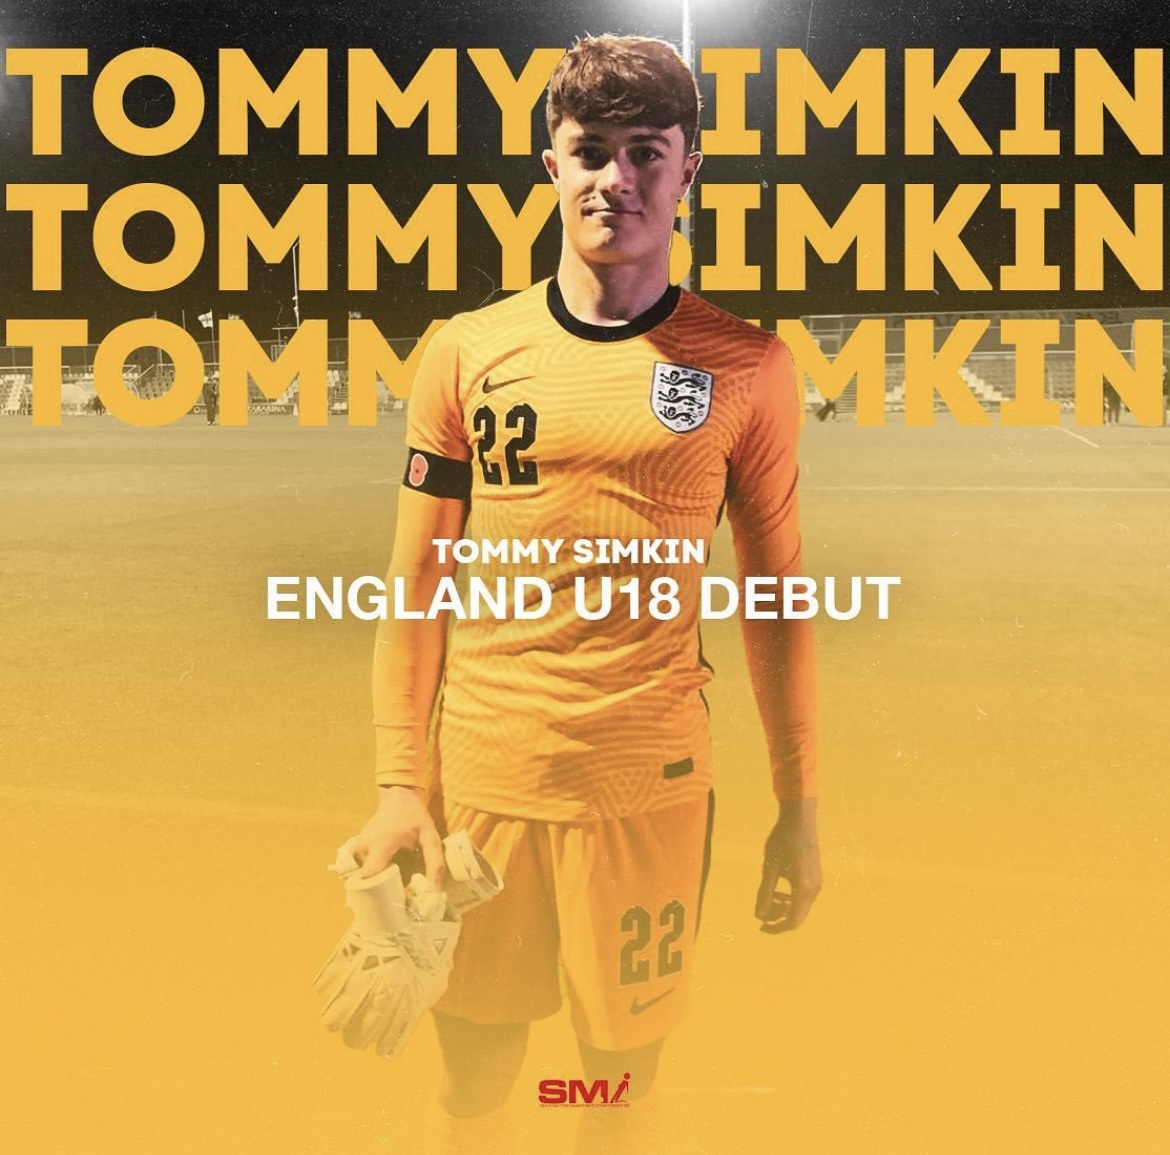 Tommy Simkin England debut